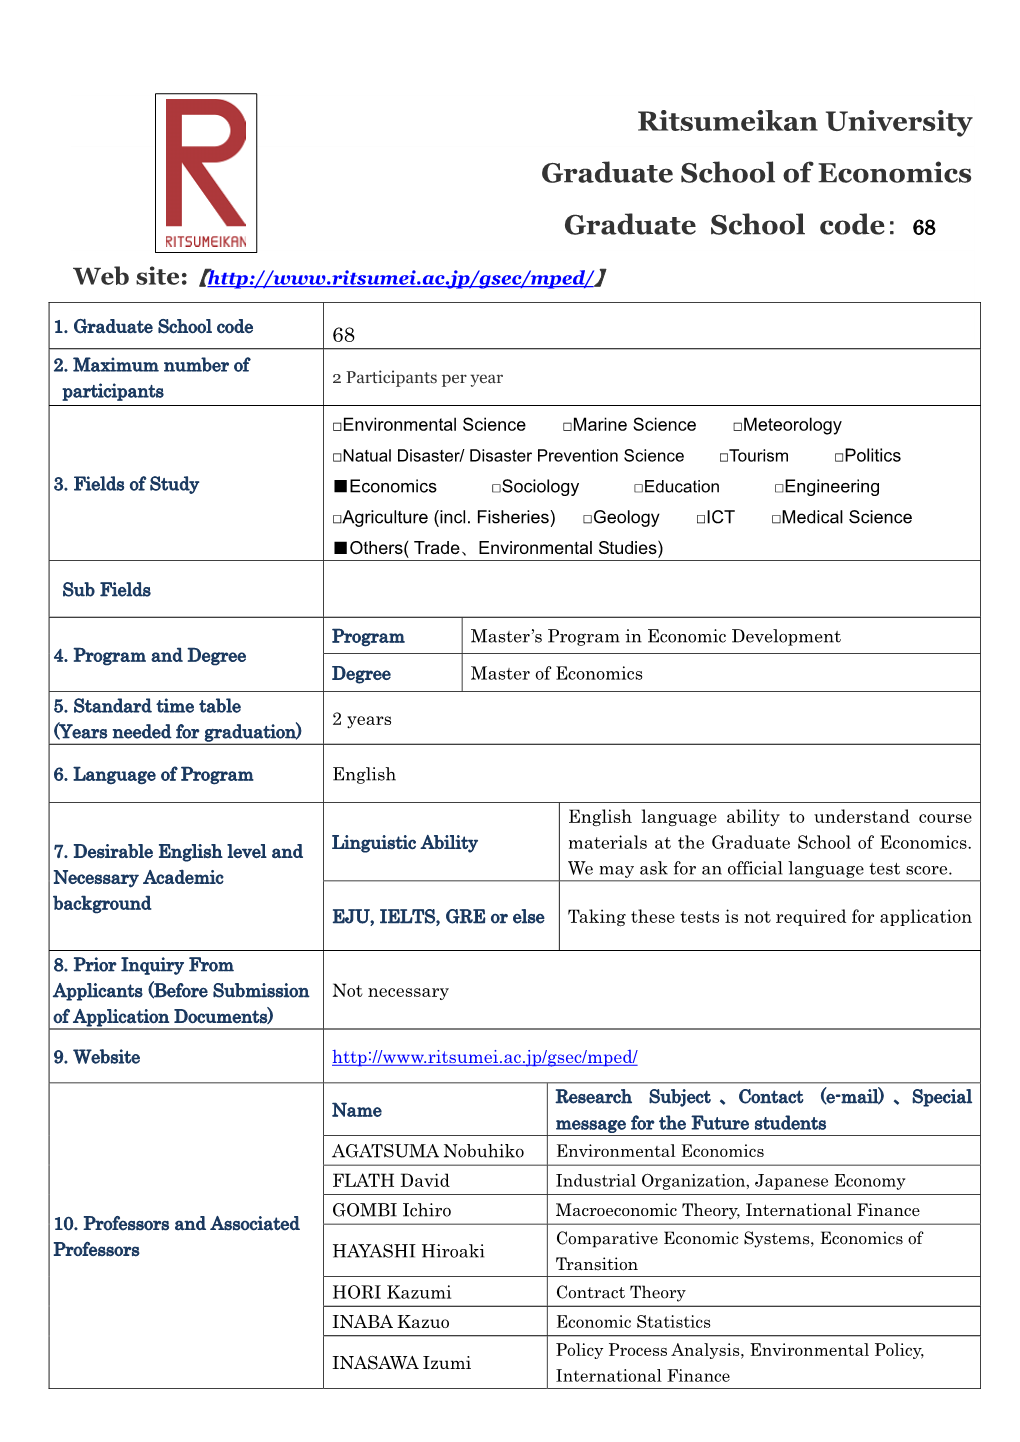 Ritsumeikan University Graduate School of Economics ： Graduate School Code 68 Web Site: 【